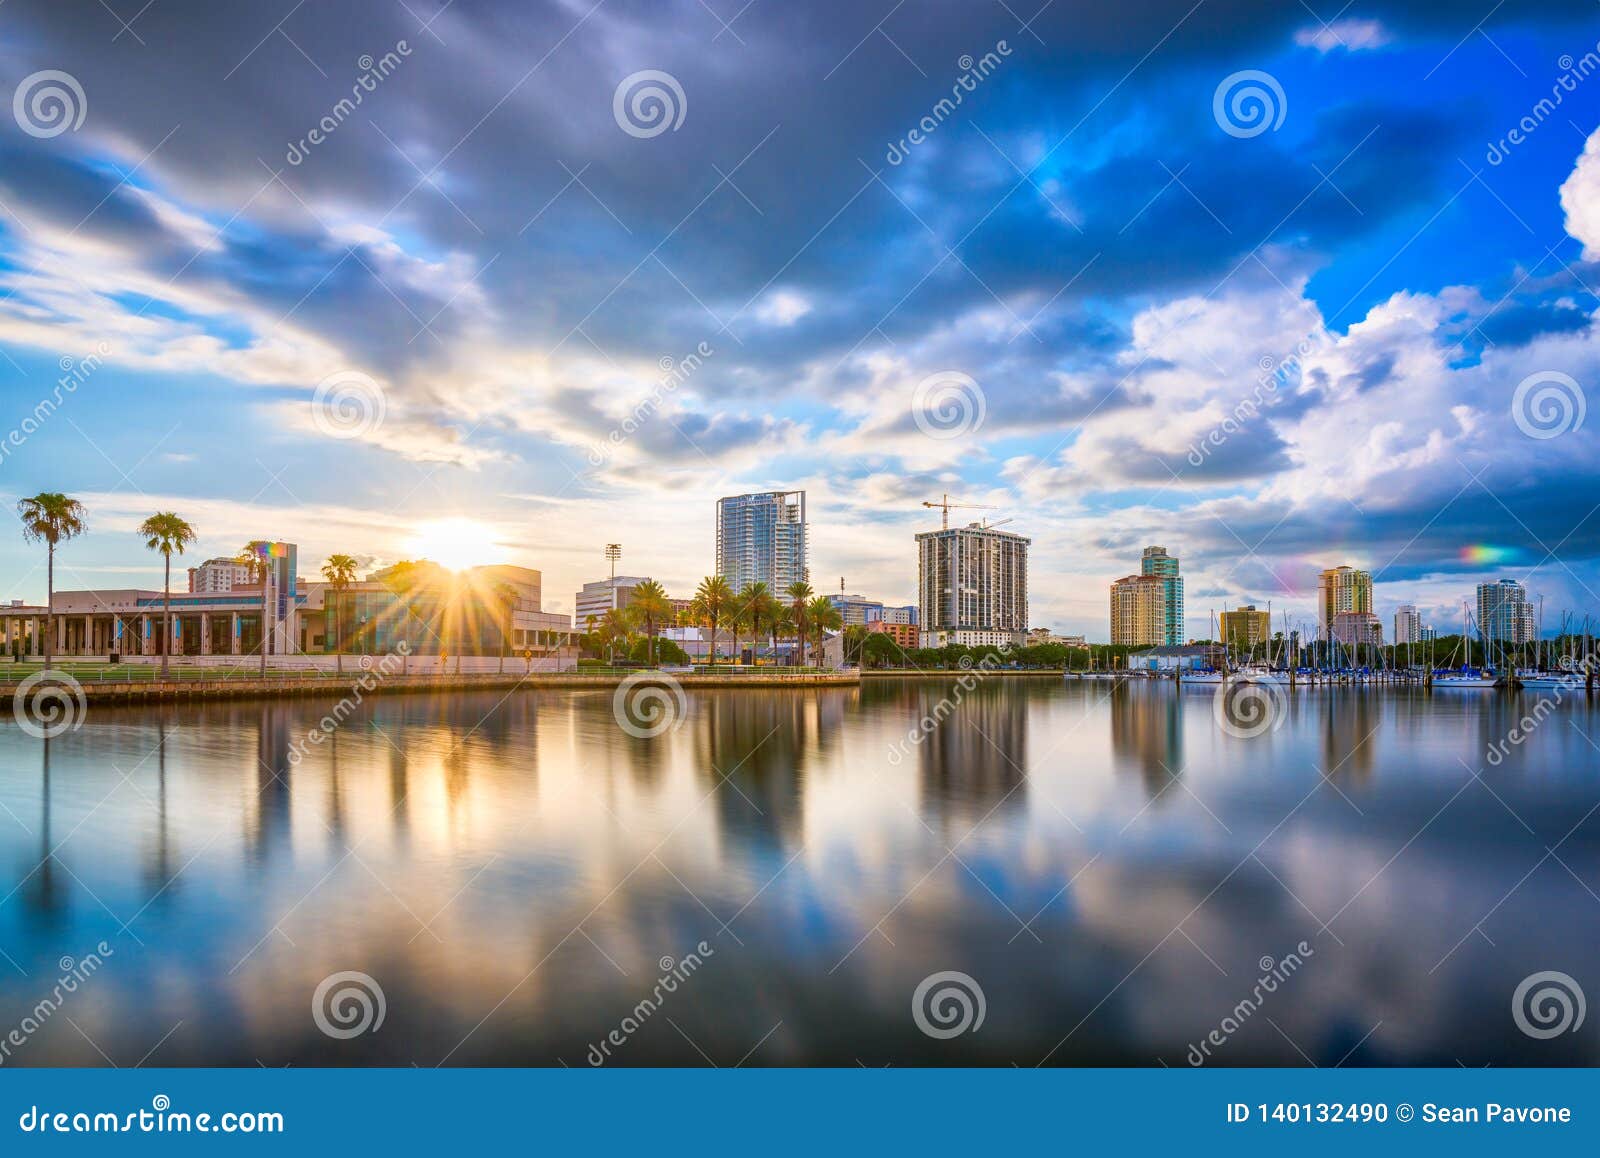 st. petersburg, florida, usa downtown city skyline